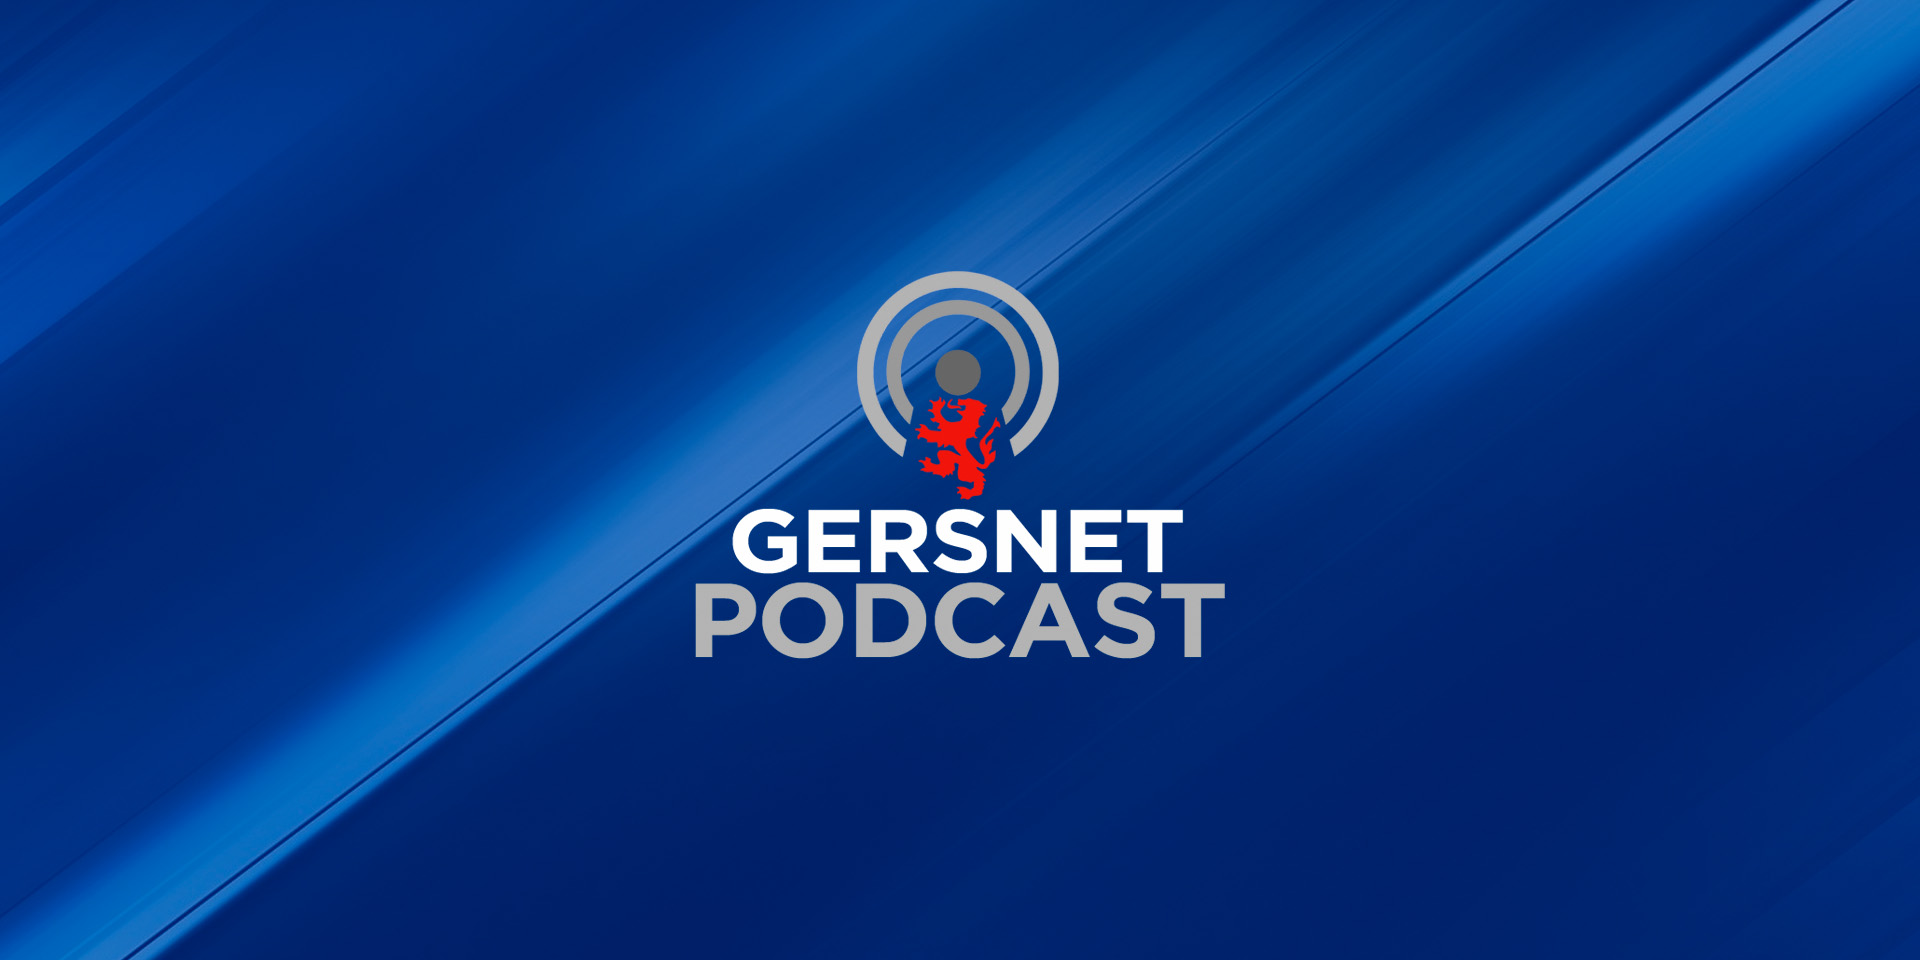 Gersnet Podcast 299 - A Sunday Stroll